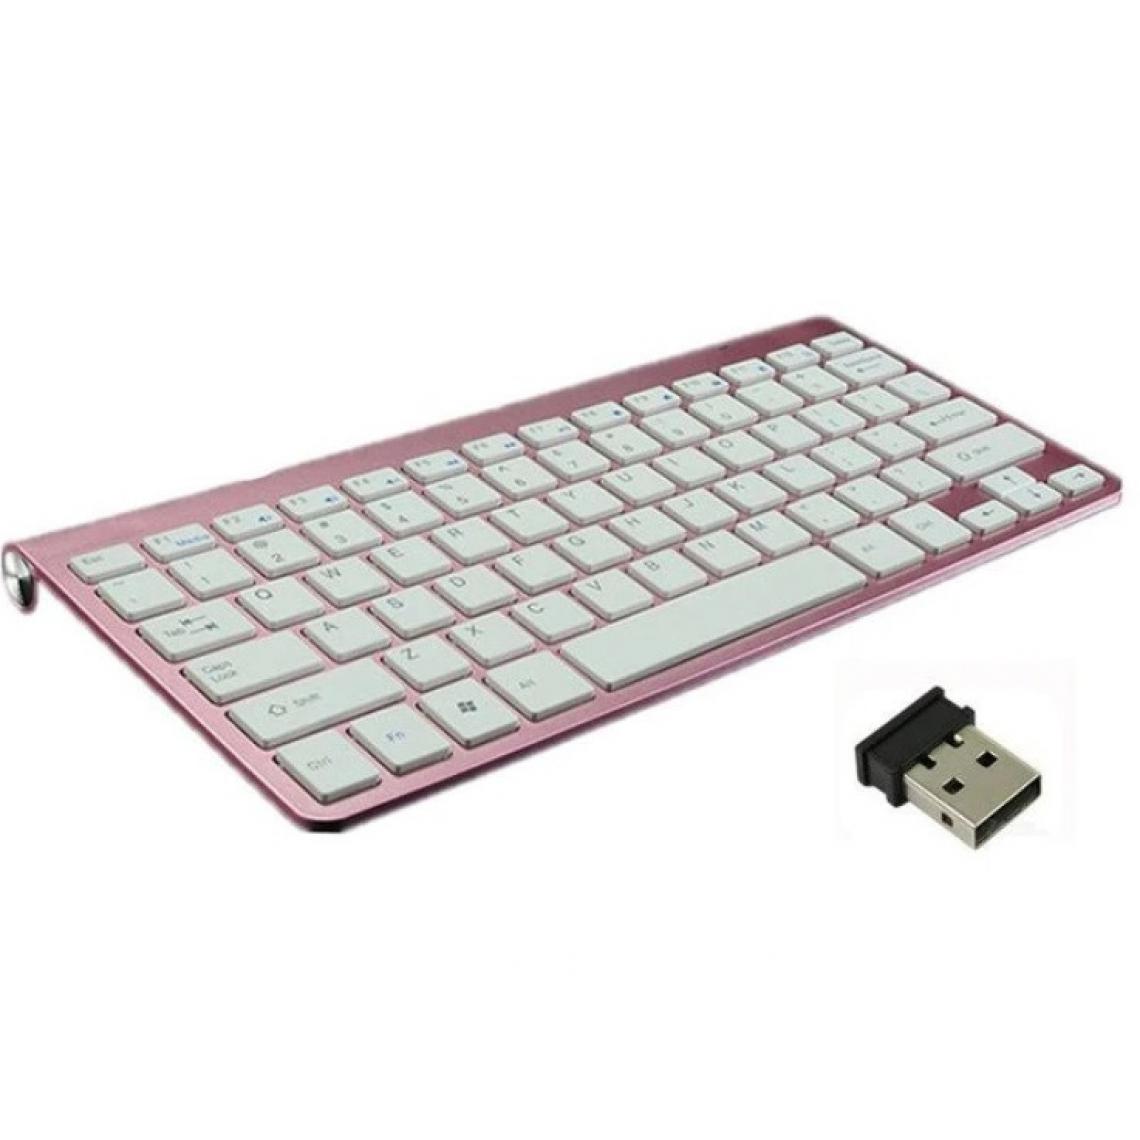 Shot - Clavier Sans Fil Metal pour PC PACKARD BELL USB QWERTY Piles (ROSE) - Clavier